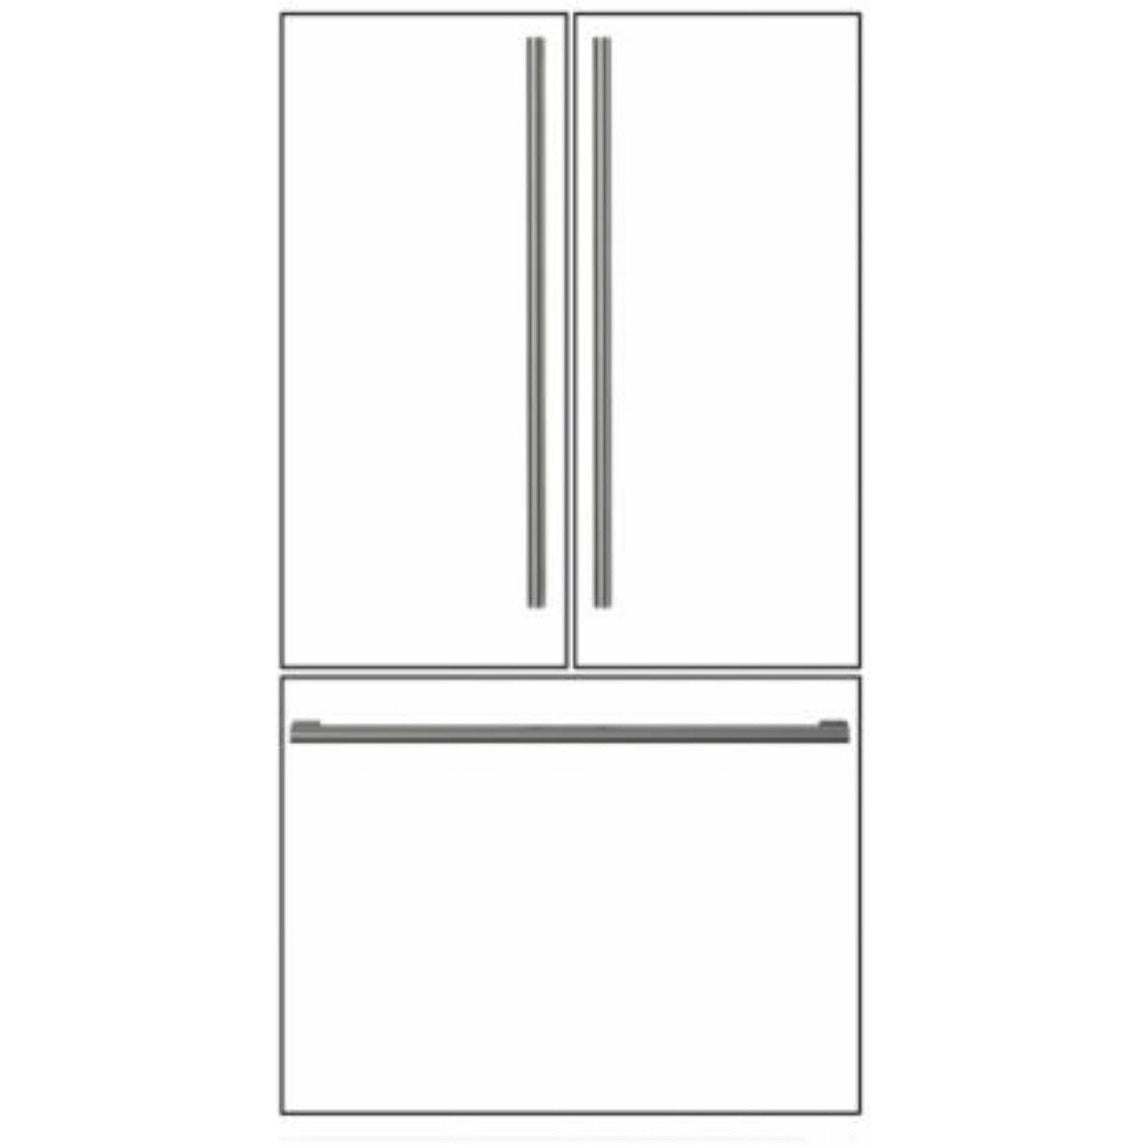 Fulgor Milano Distinto Handle Kit for 36" Freestanding Refrigerator - F7HK36FFBS